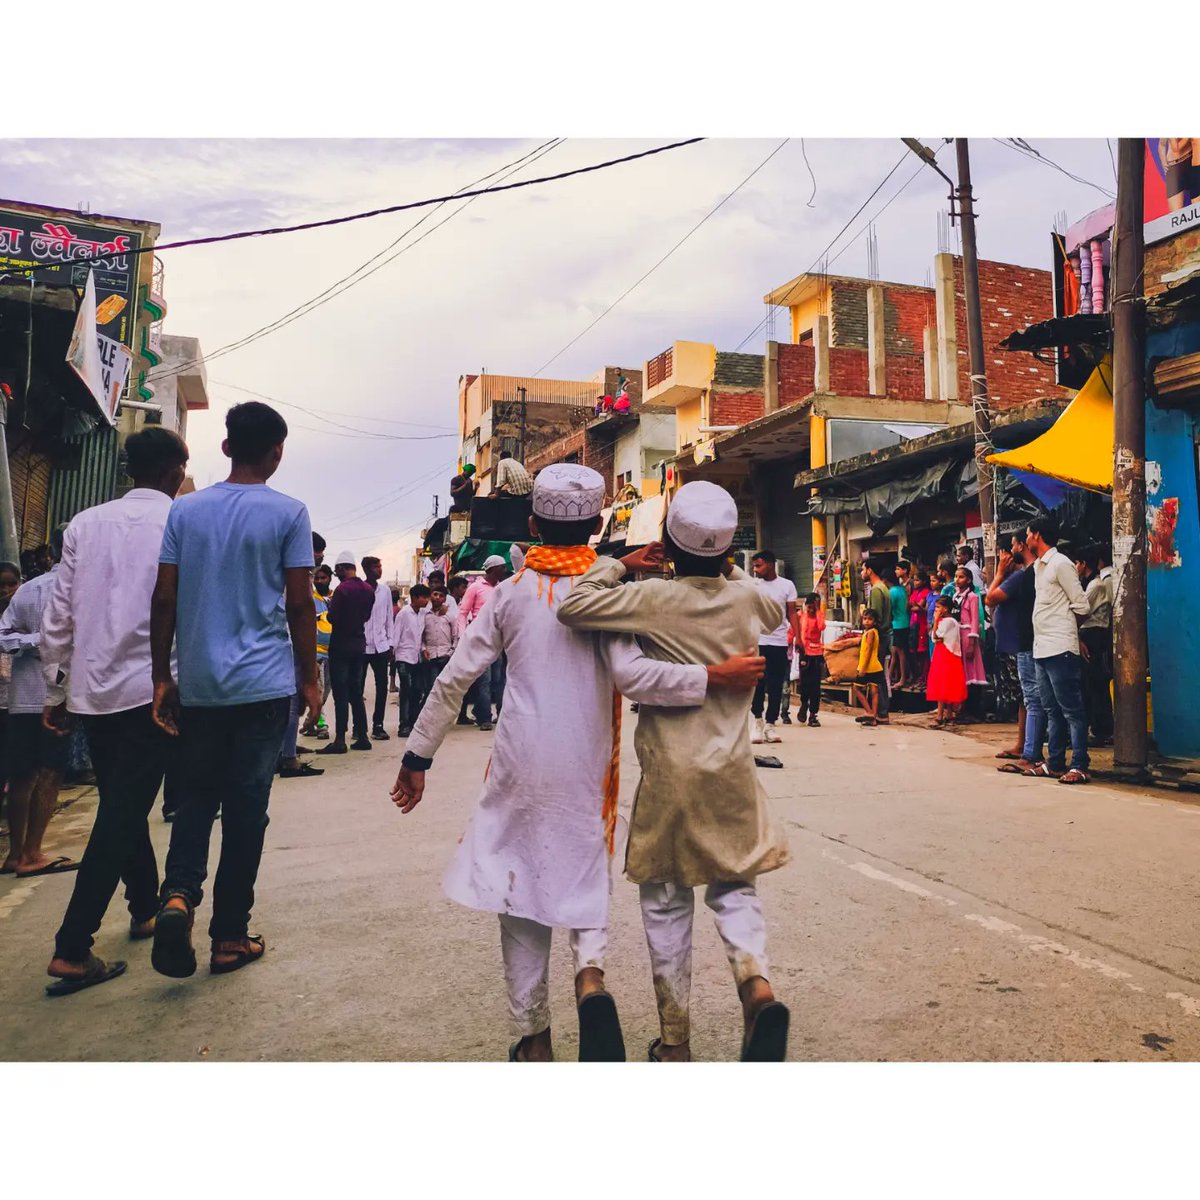 Friendship 🌟🌟🎵⭐🌟

#photooftheday #streetphotography #spi_collective #nustaharamkhor #oyeportraitwala